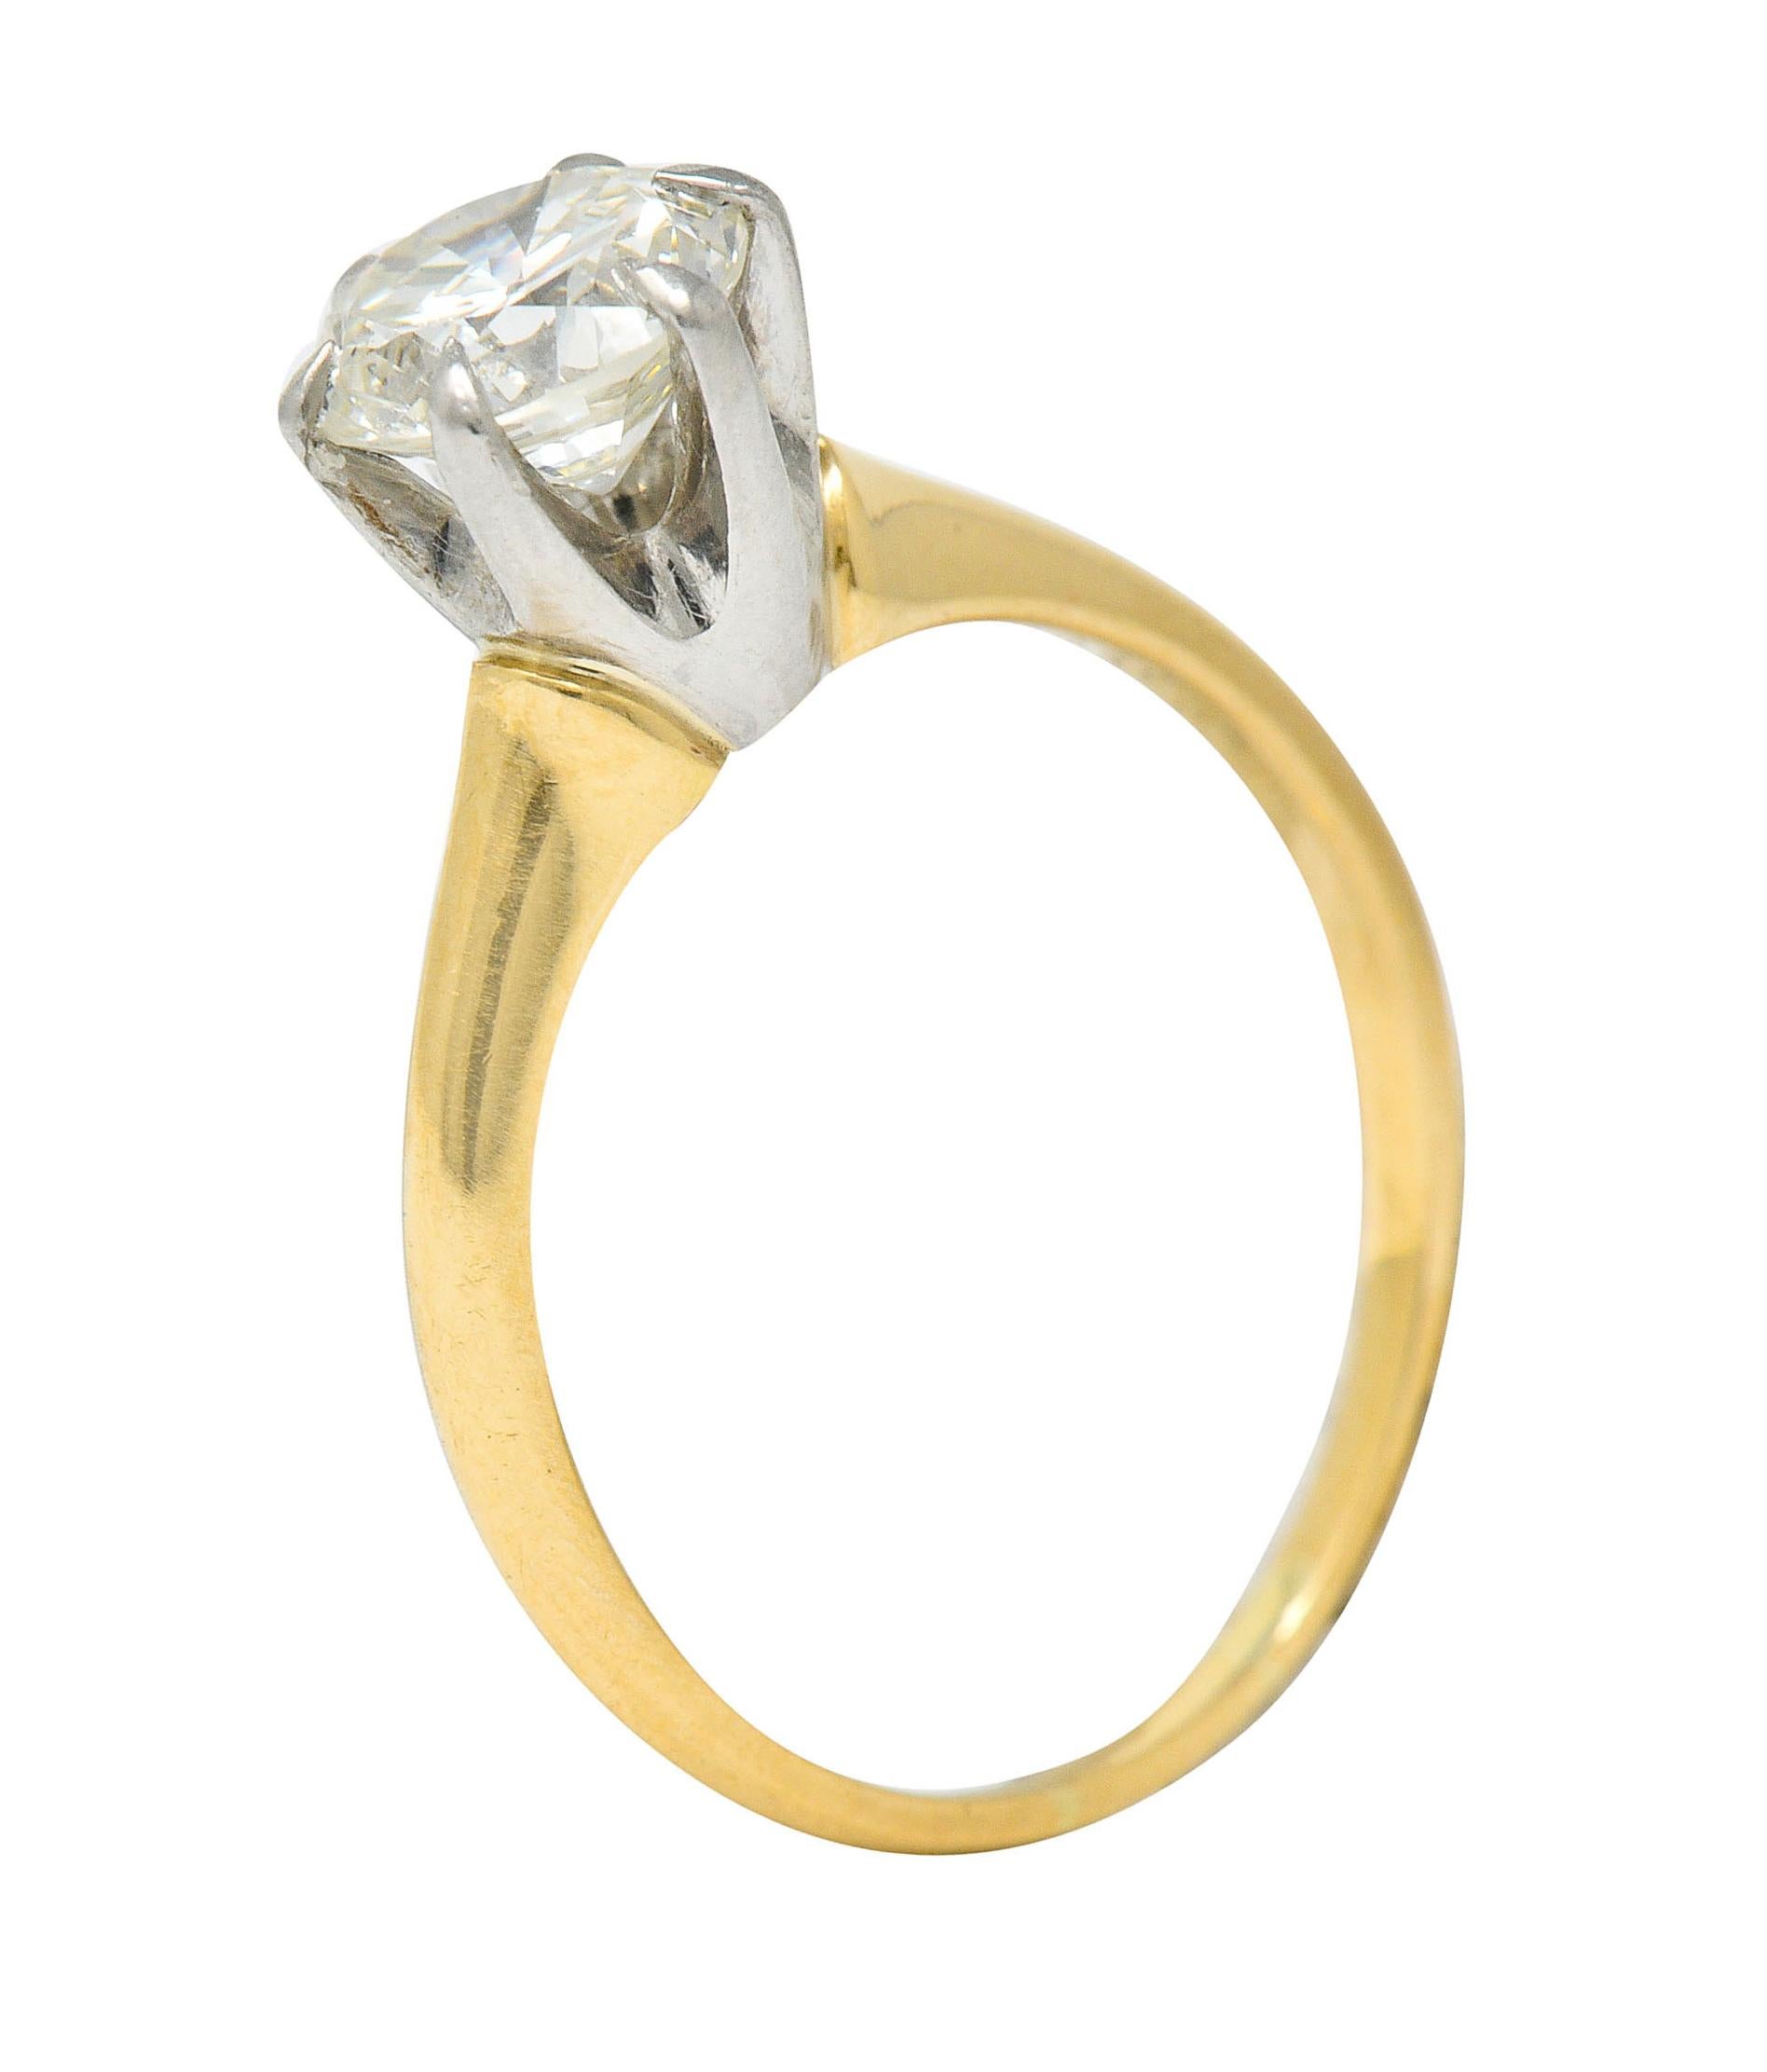 J.E. Caldwell 1.19 Carats Diamond 14 Karat Gold Solitaire Engagement Ring GIA 4